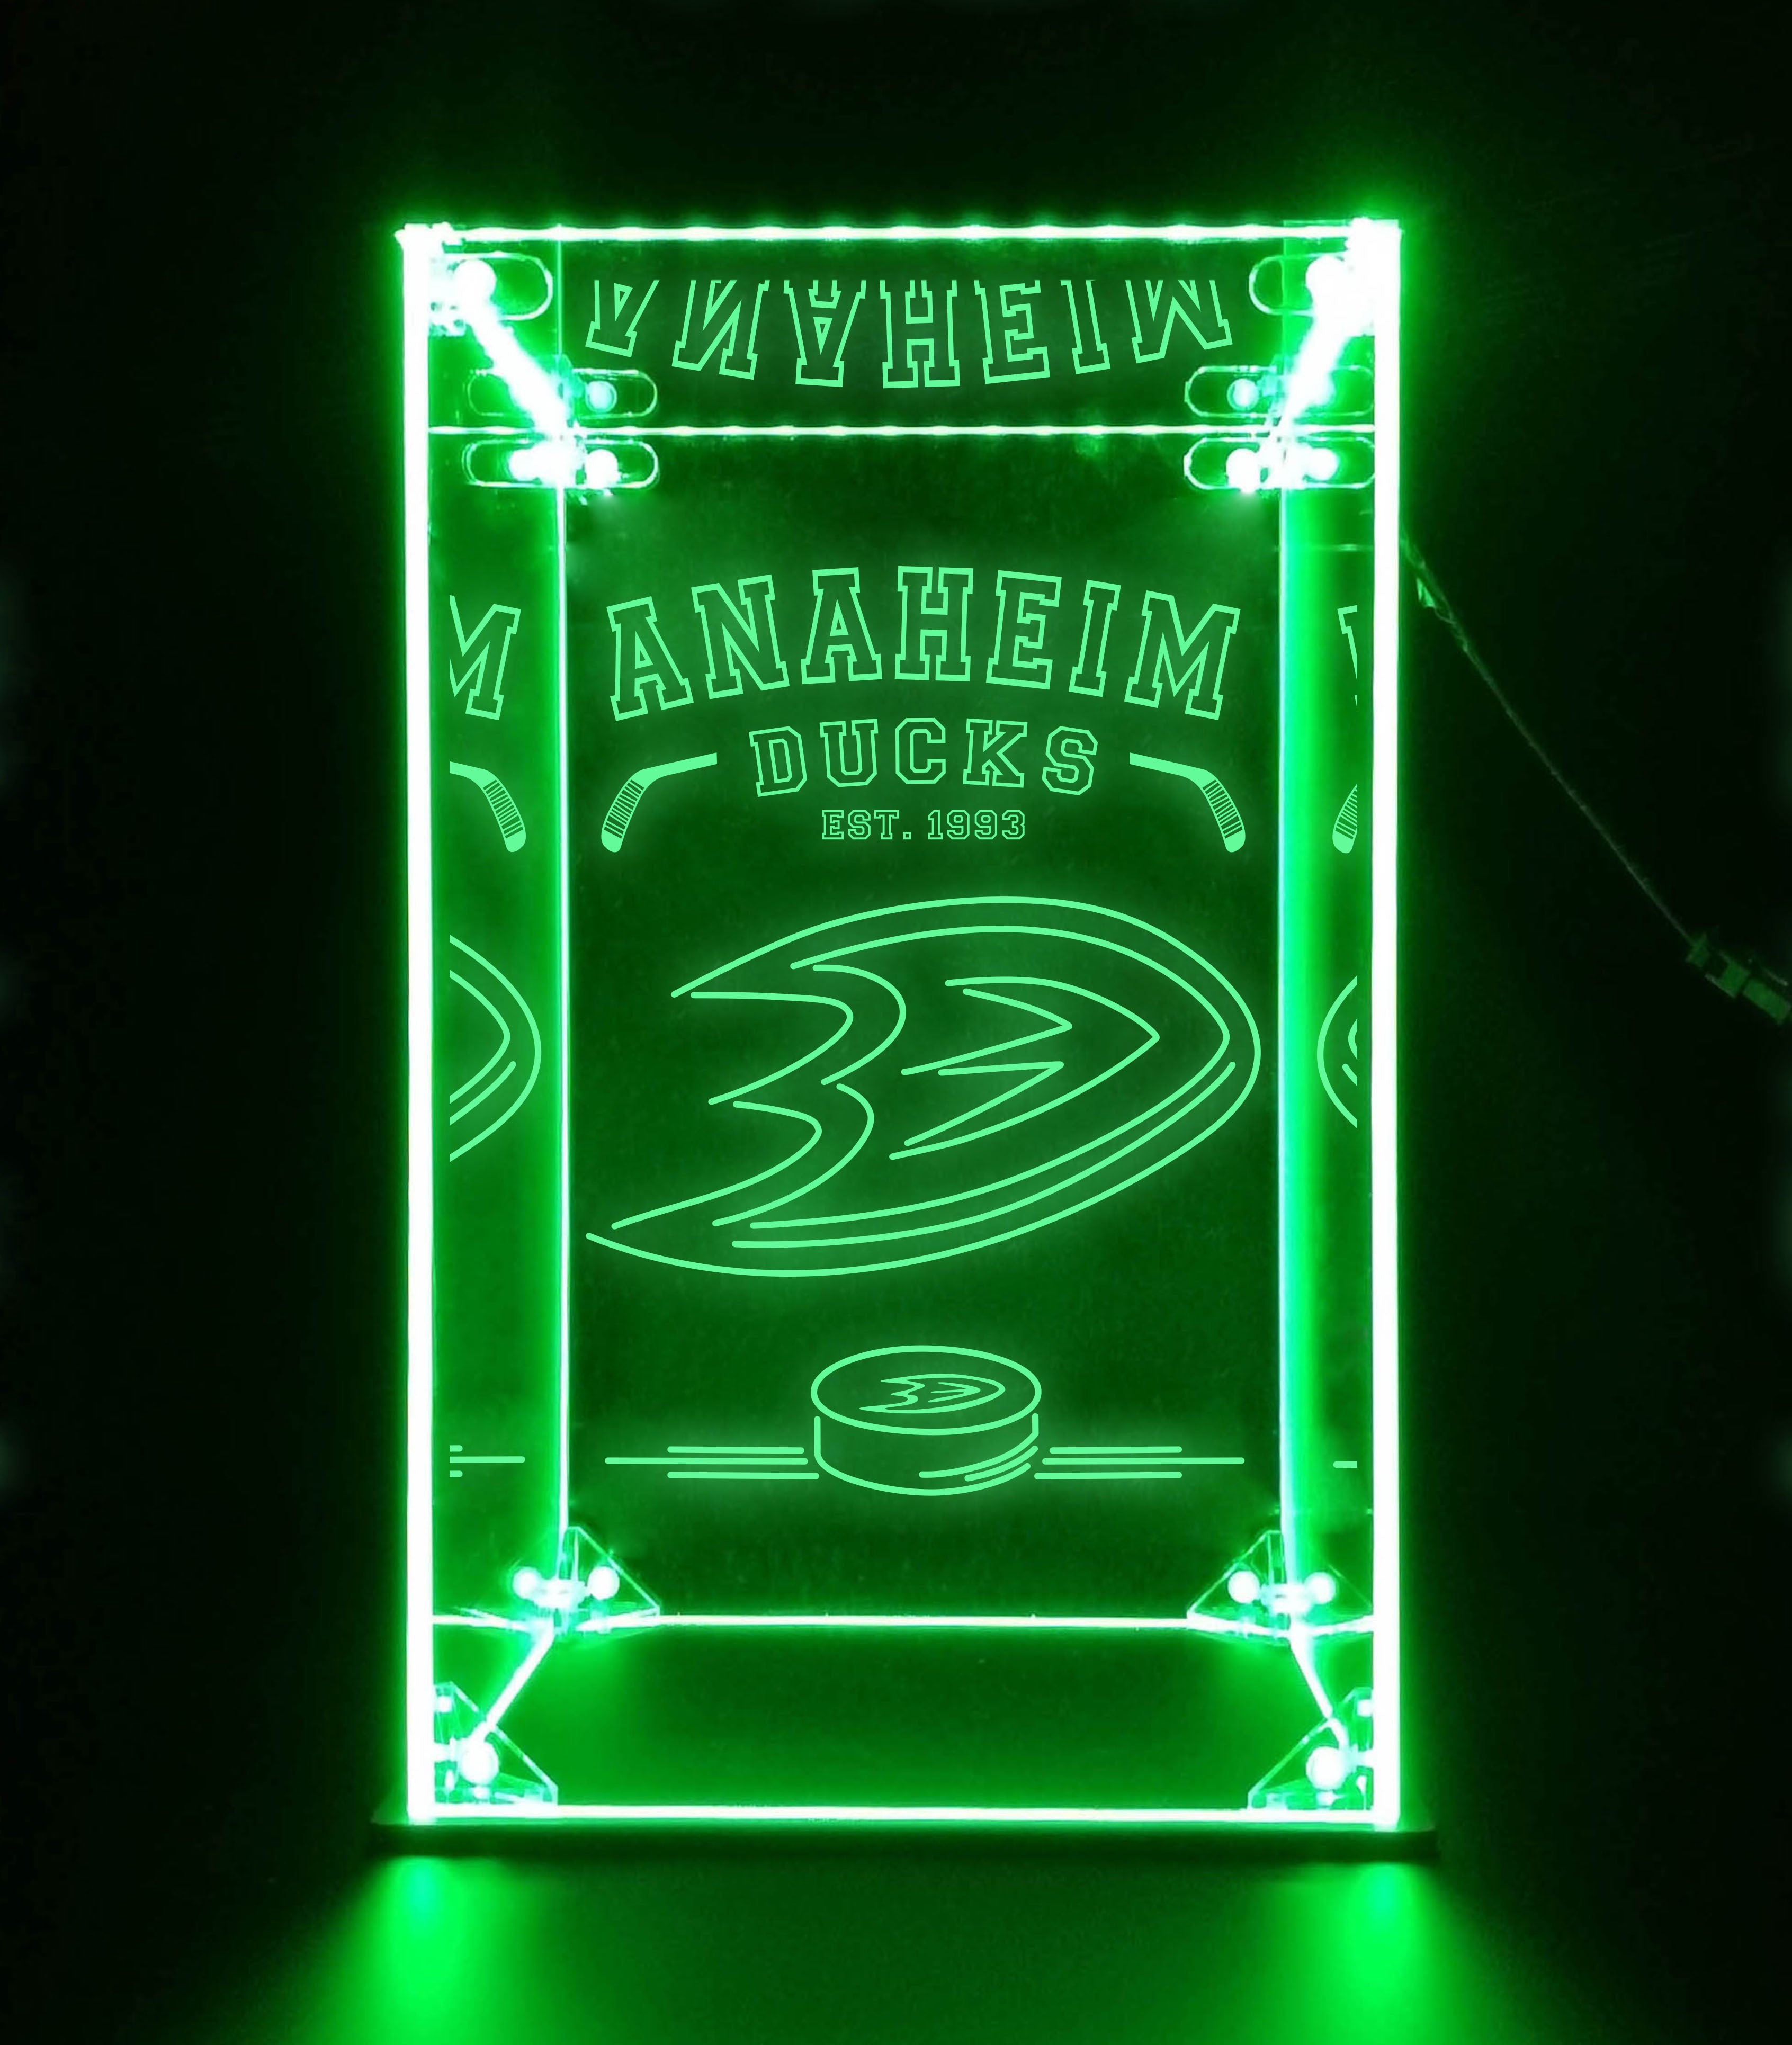 LED Display Case For Anahemi Ducks Sports Memorabilia